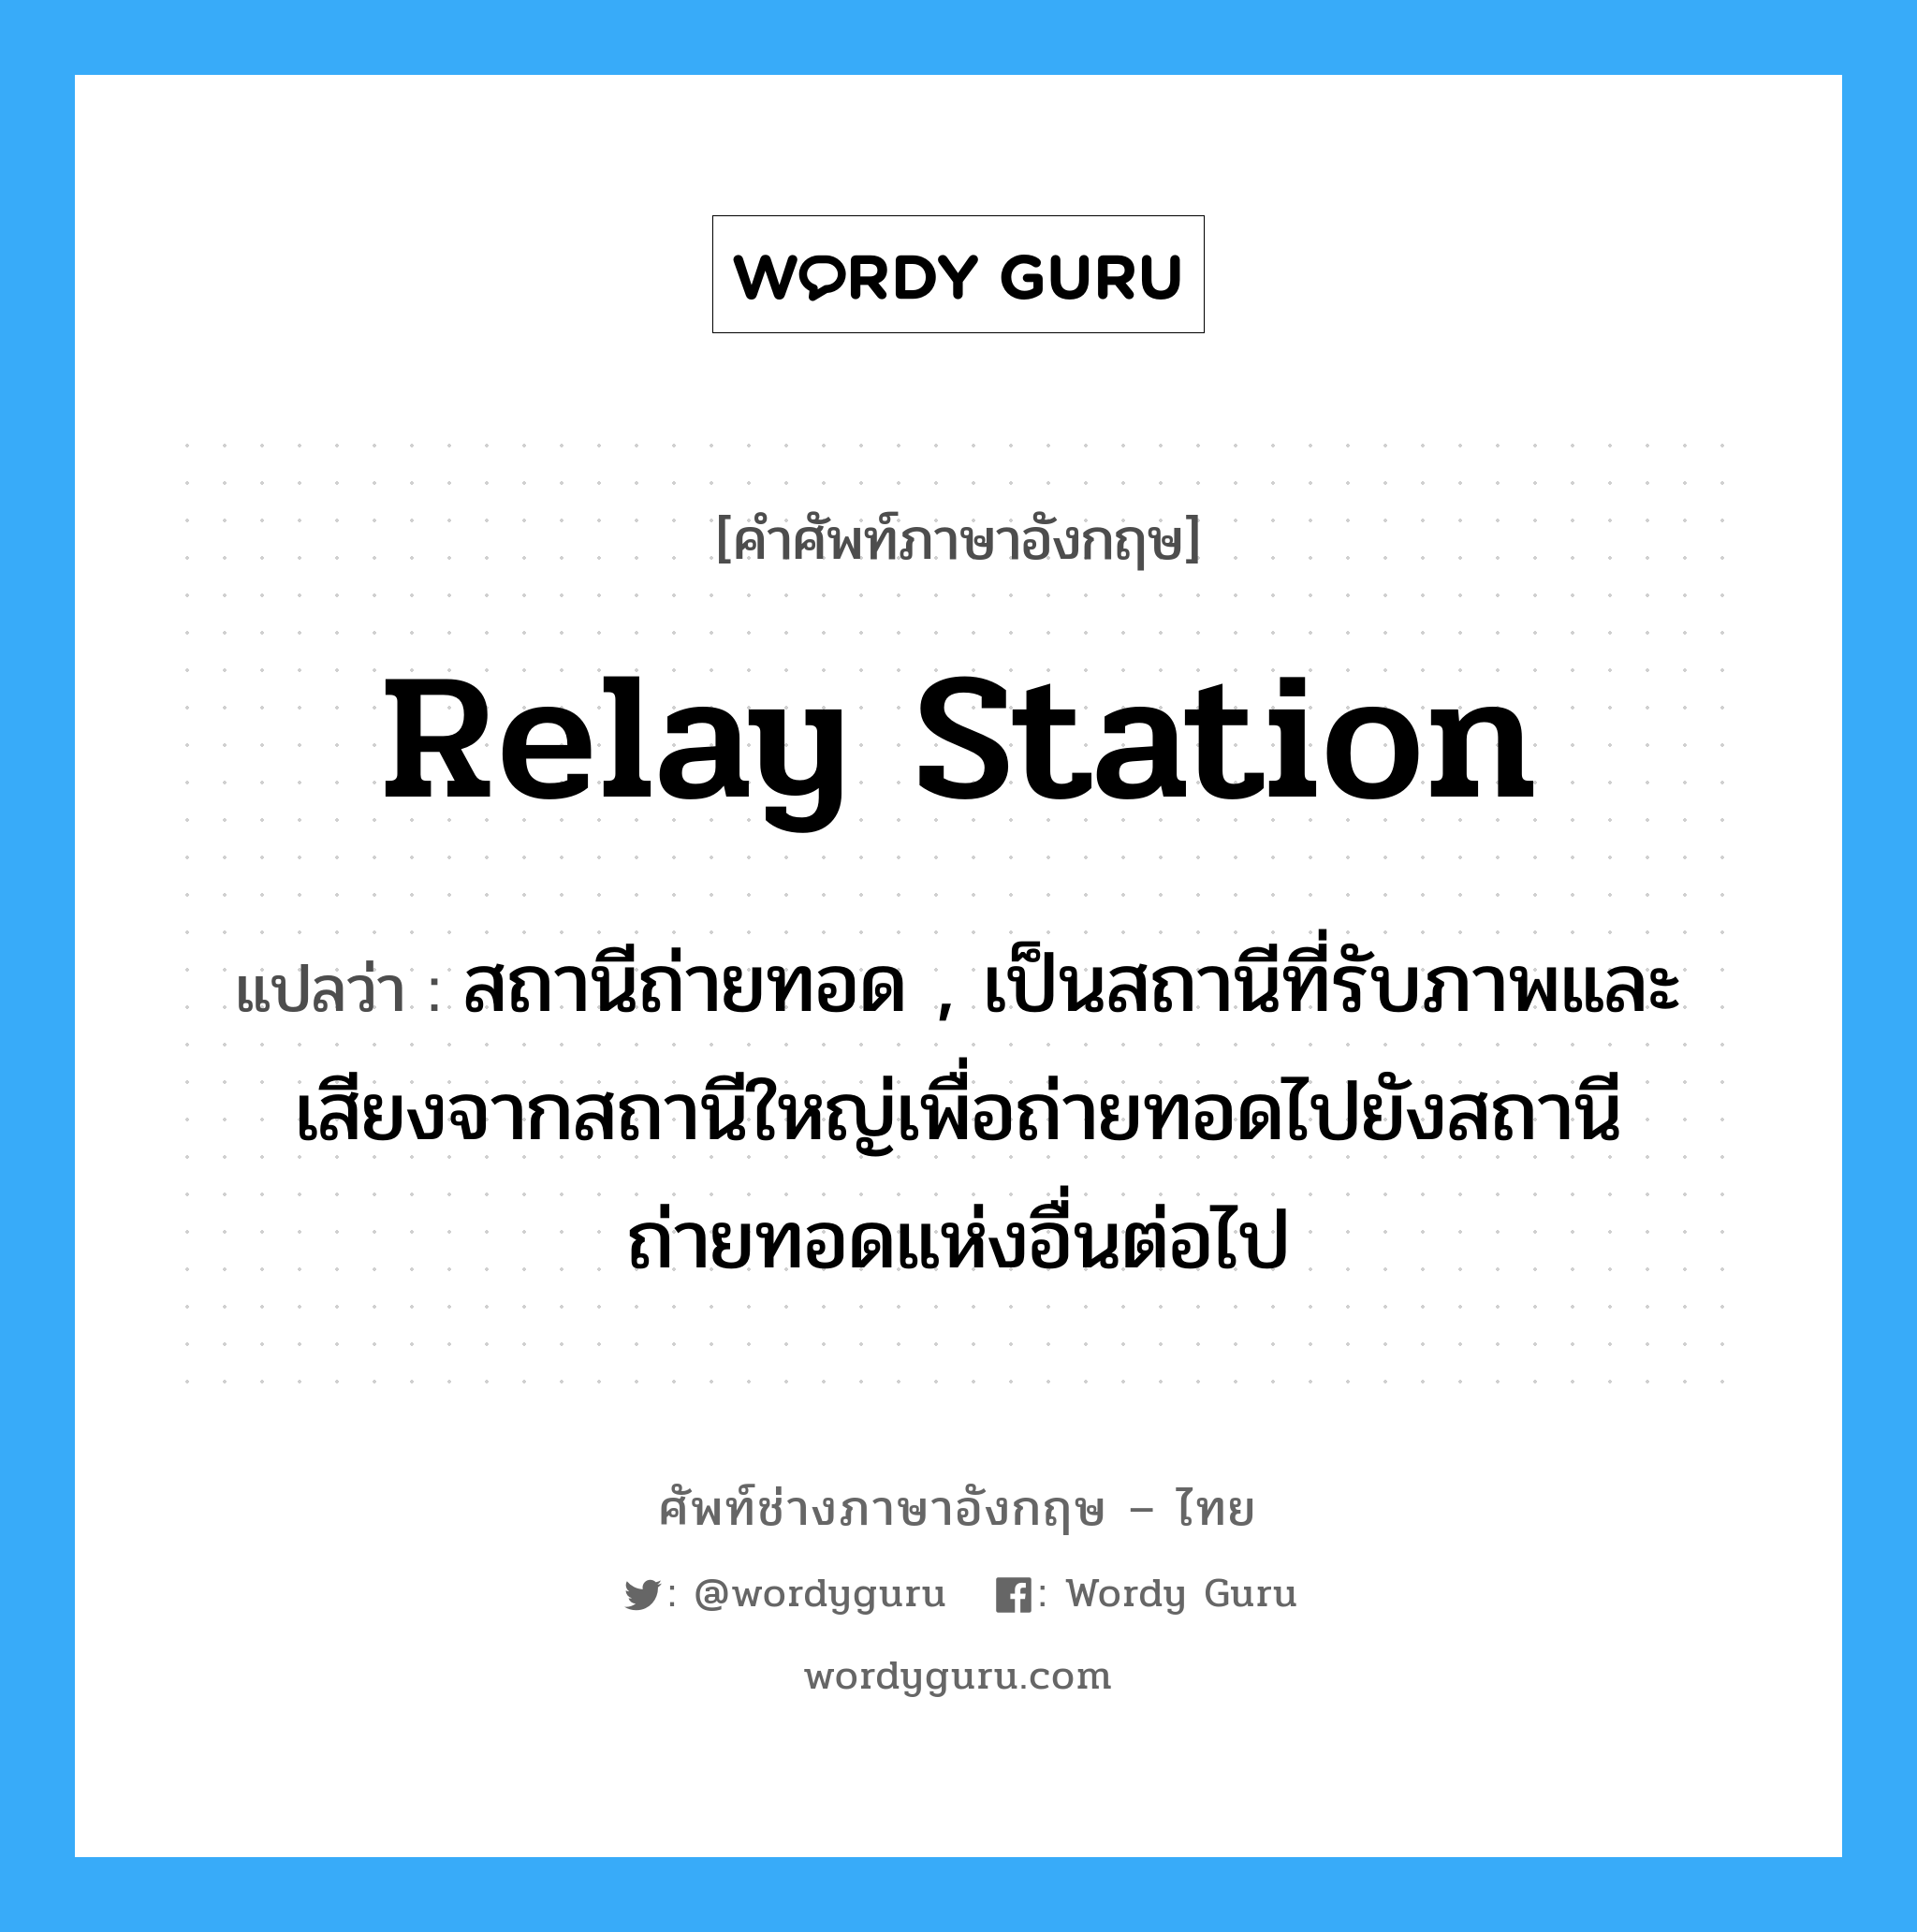 relay station แปลว่า?, คำศัพท์ช่างภาษาอังกฤษ - ไทย relay station คำศัพท์ภาษาอังกฤษ relay station แปลว่า สถานีถ่ายทอด , เป็นสถานีที่รับภาพและเสียงจากสถานีใหญ่เพื่อถ่ายทอดไปยังสถานีถ่ายทอดแห่งอื่นต่อไป